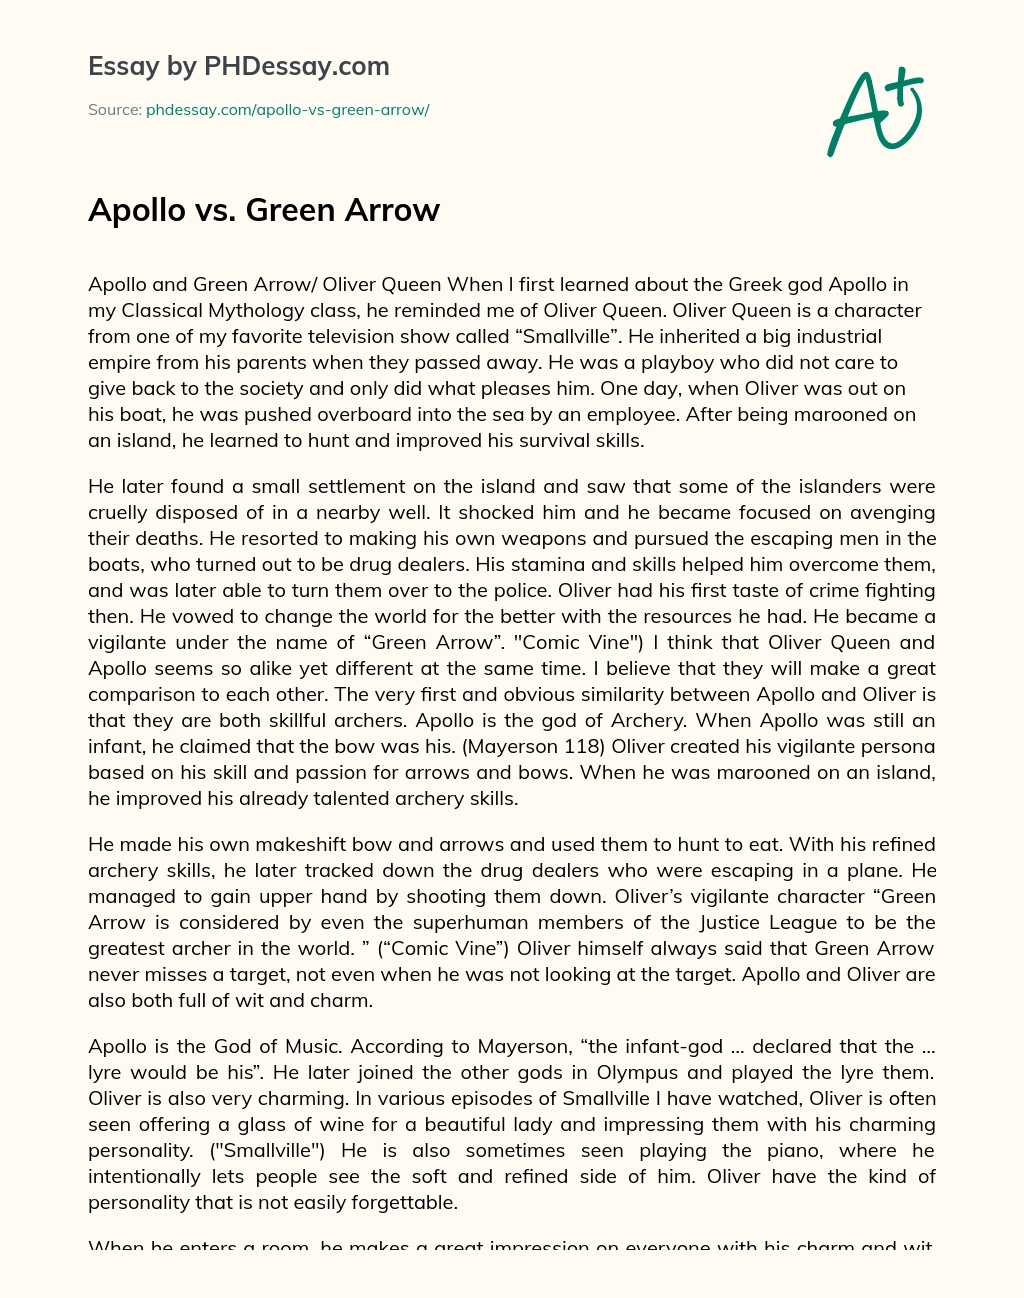 Apollo vs. Green Arrow essay